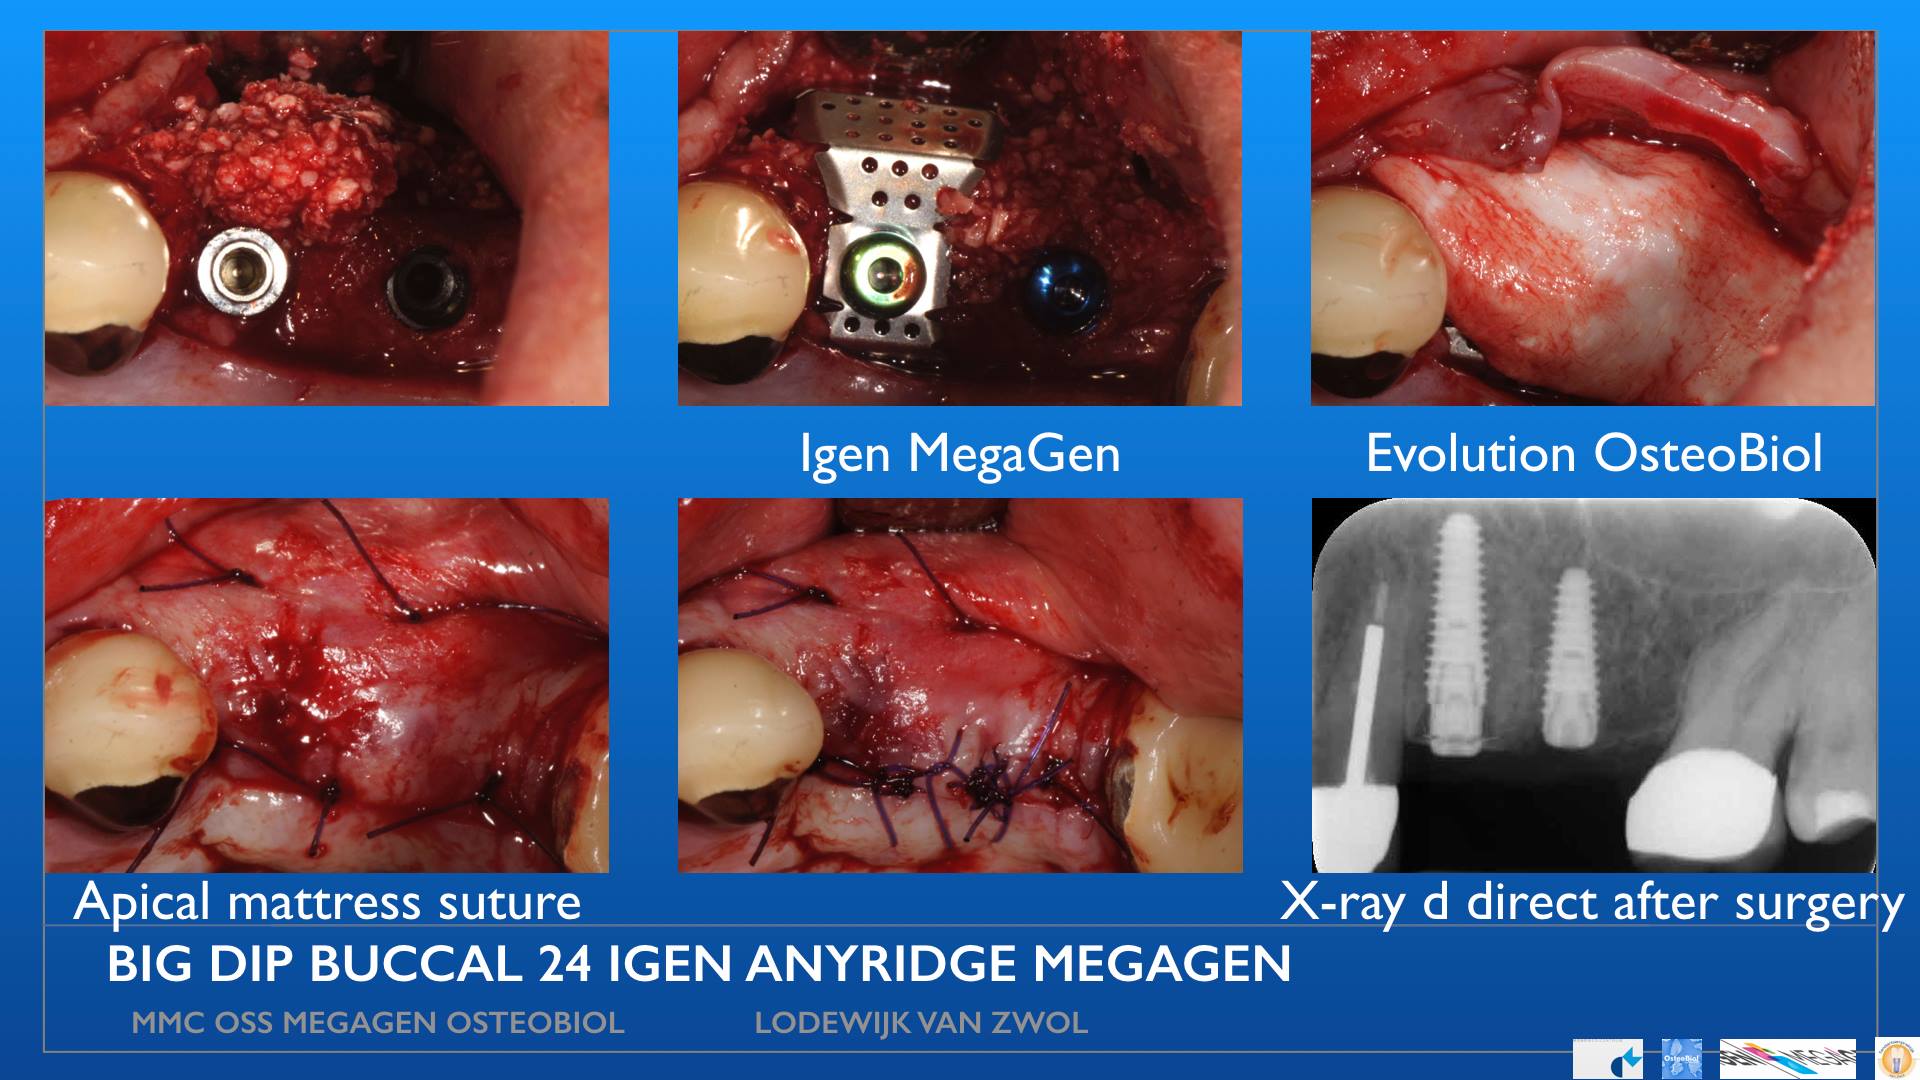 MegaGen AnyRidge with IGen icw OsteoBiol GenOs and Evolution